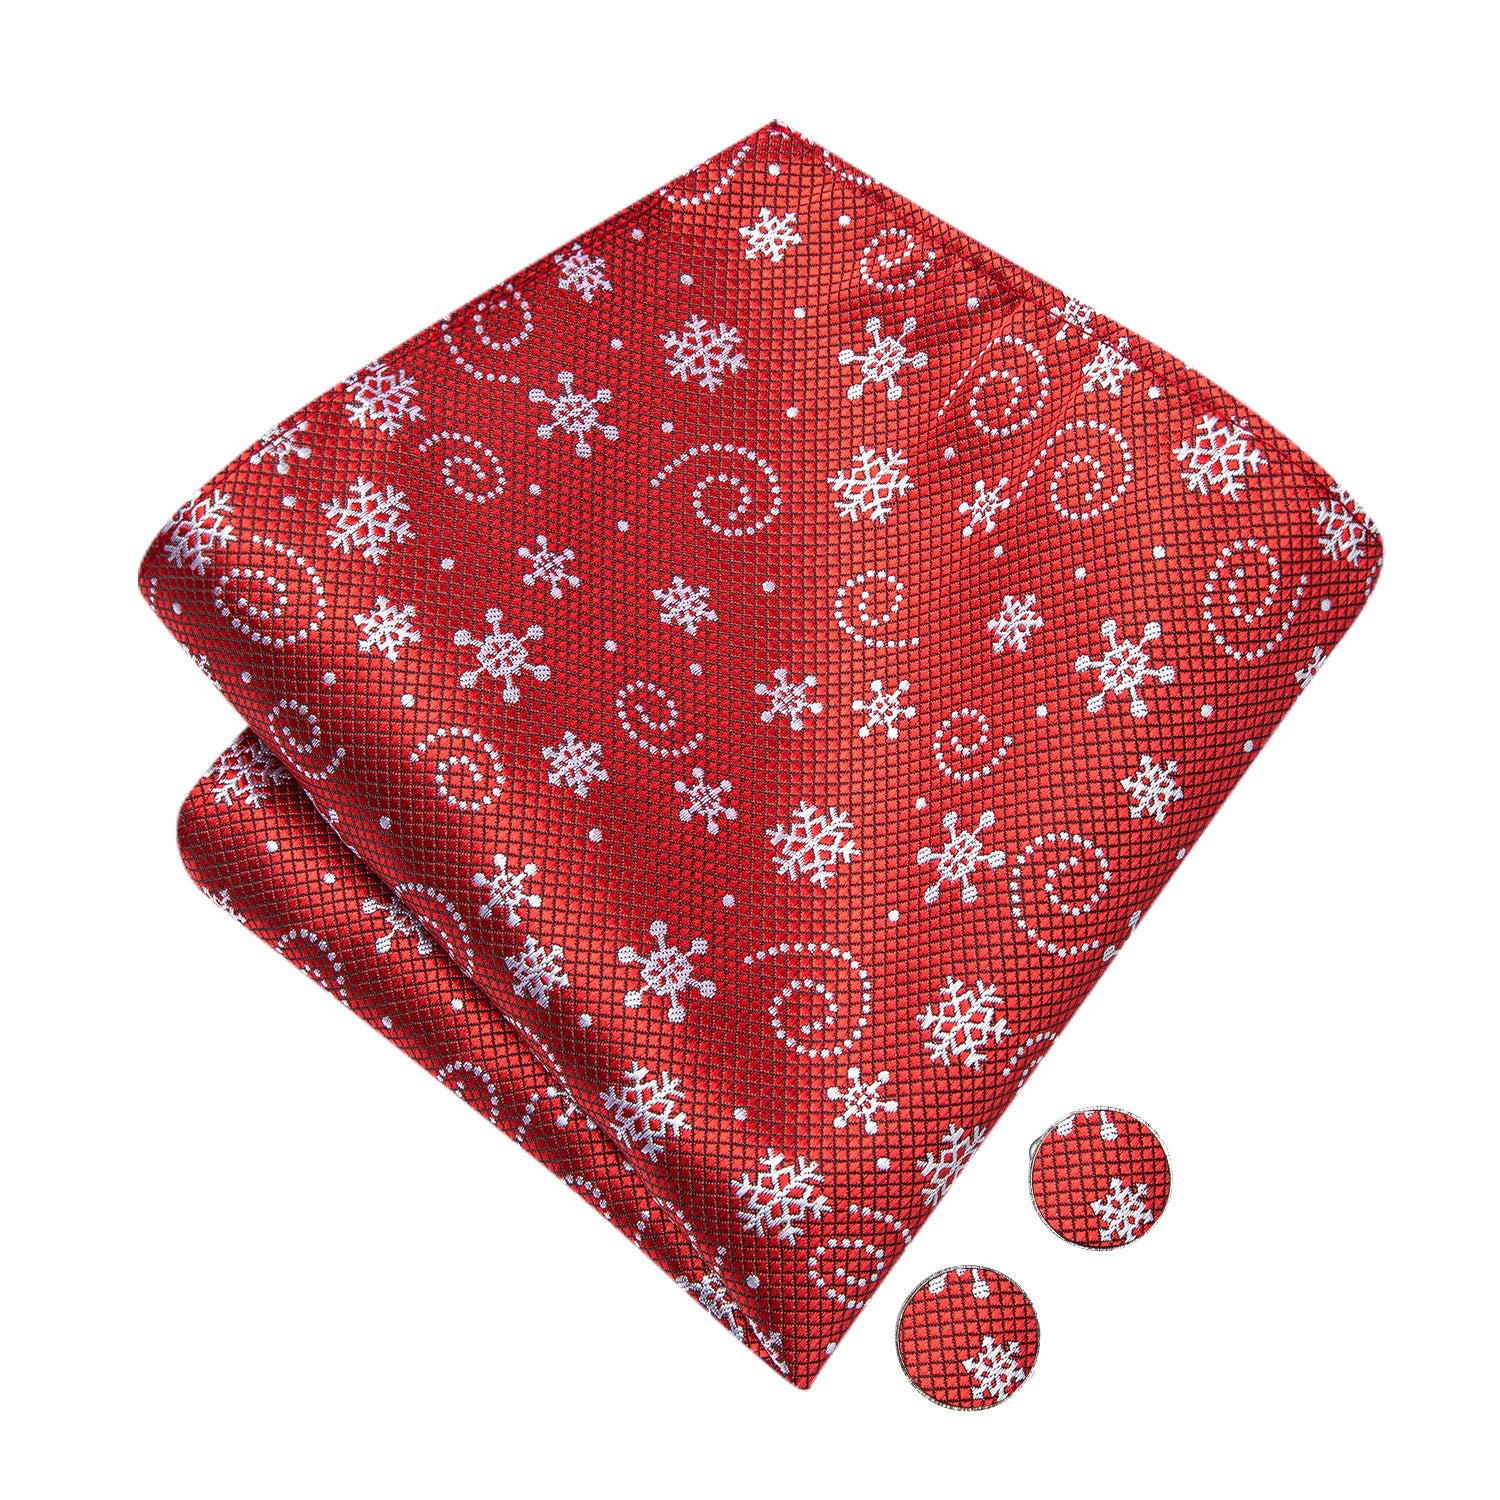 Christmas Red White Snowflake Pre-tied Bow Tie Hanky Cufflinks Set